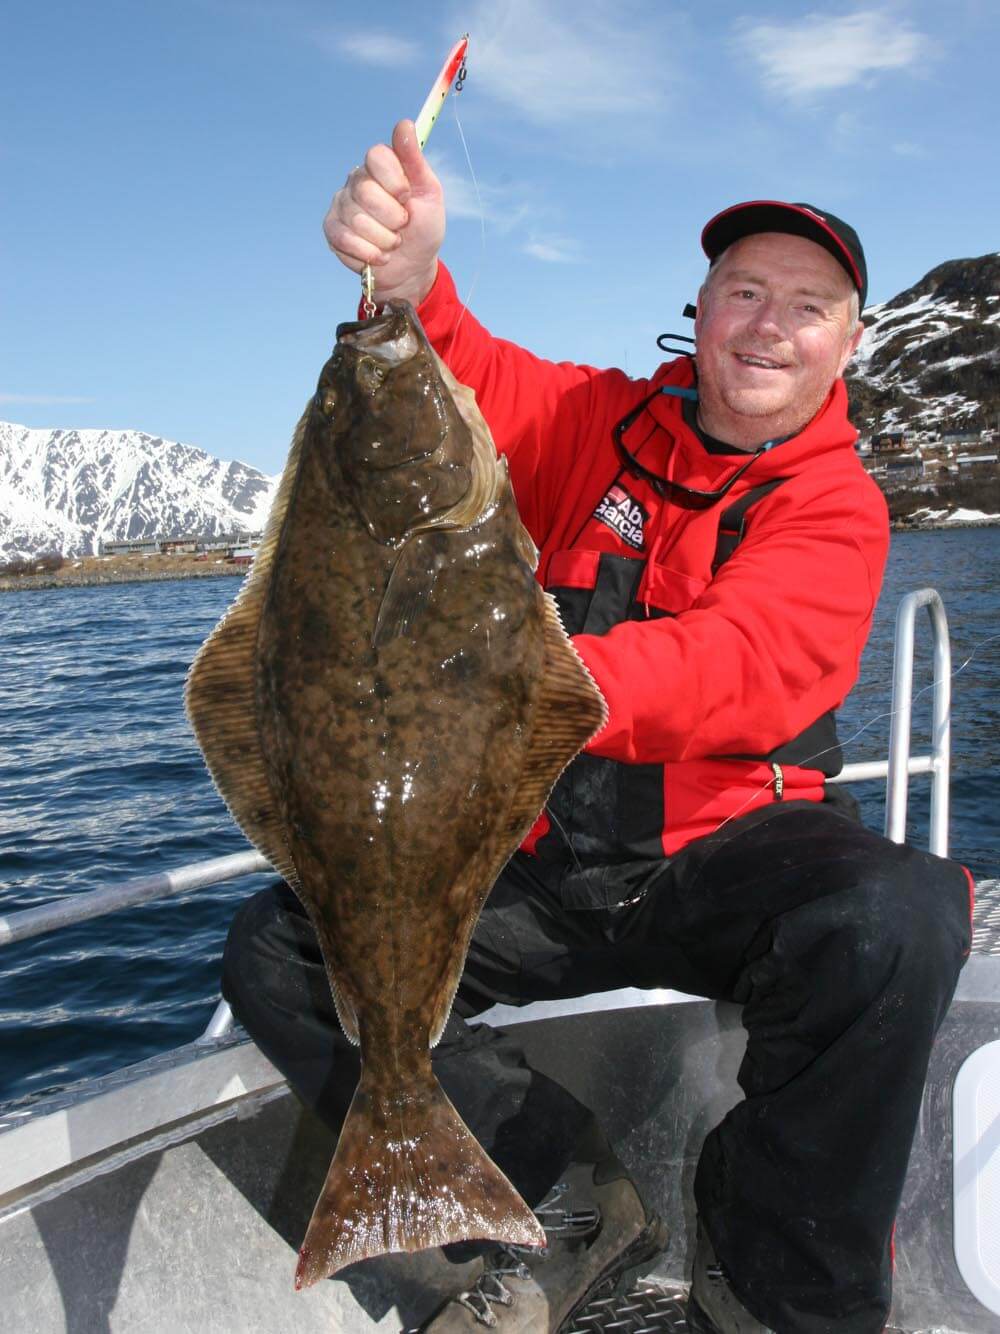 http://talkseafishing.co.uk/wp-content/uploads/2010/08/norway-halibut-fishing.jpg